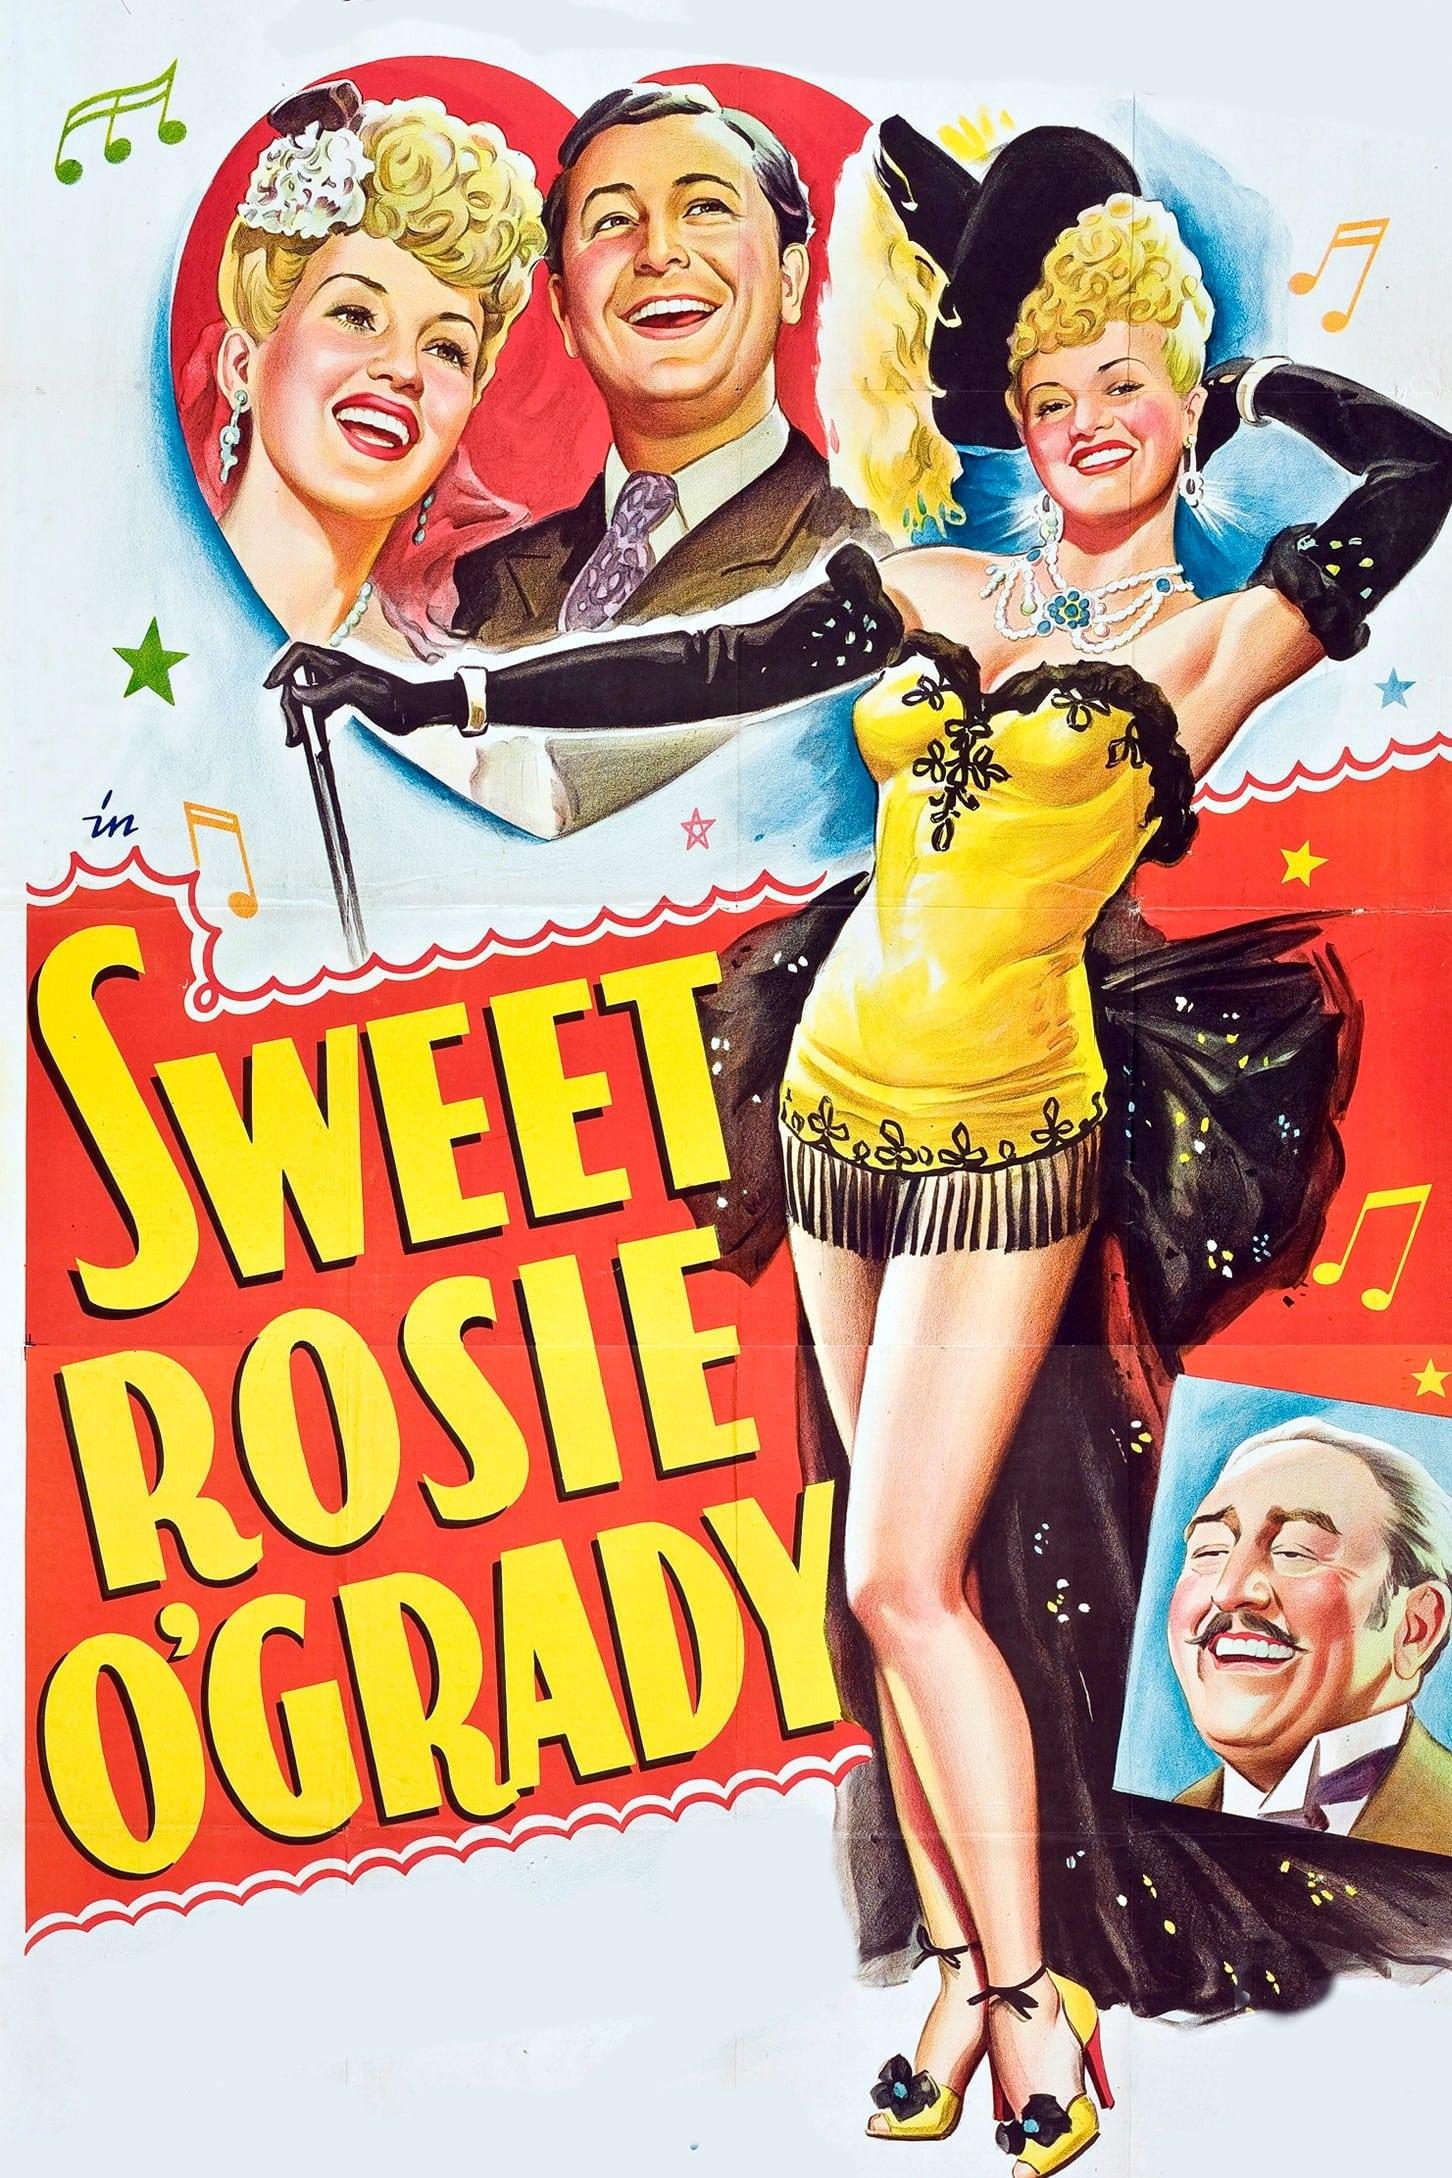 Sweet Rosie O'Grady poster